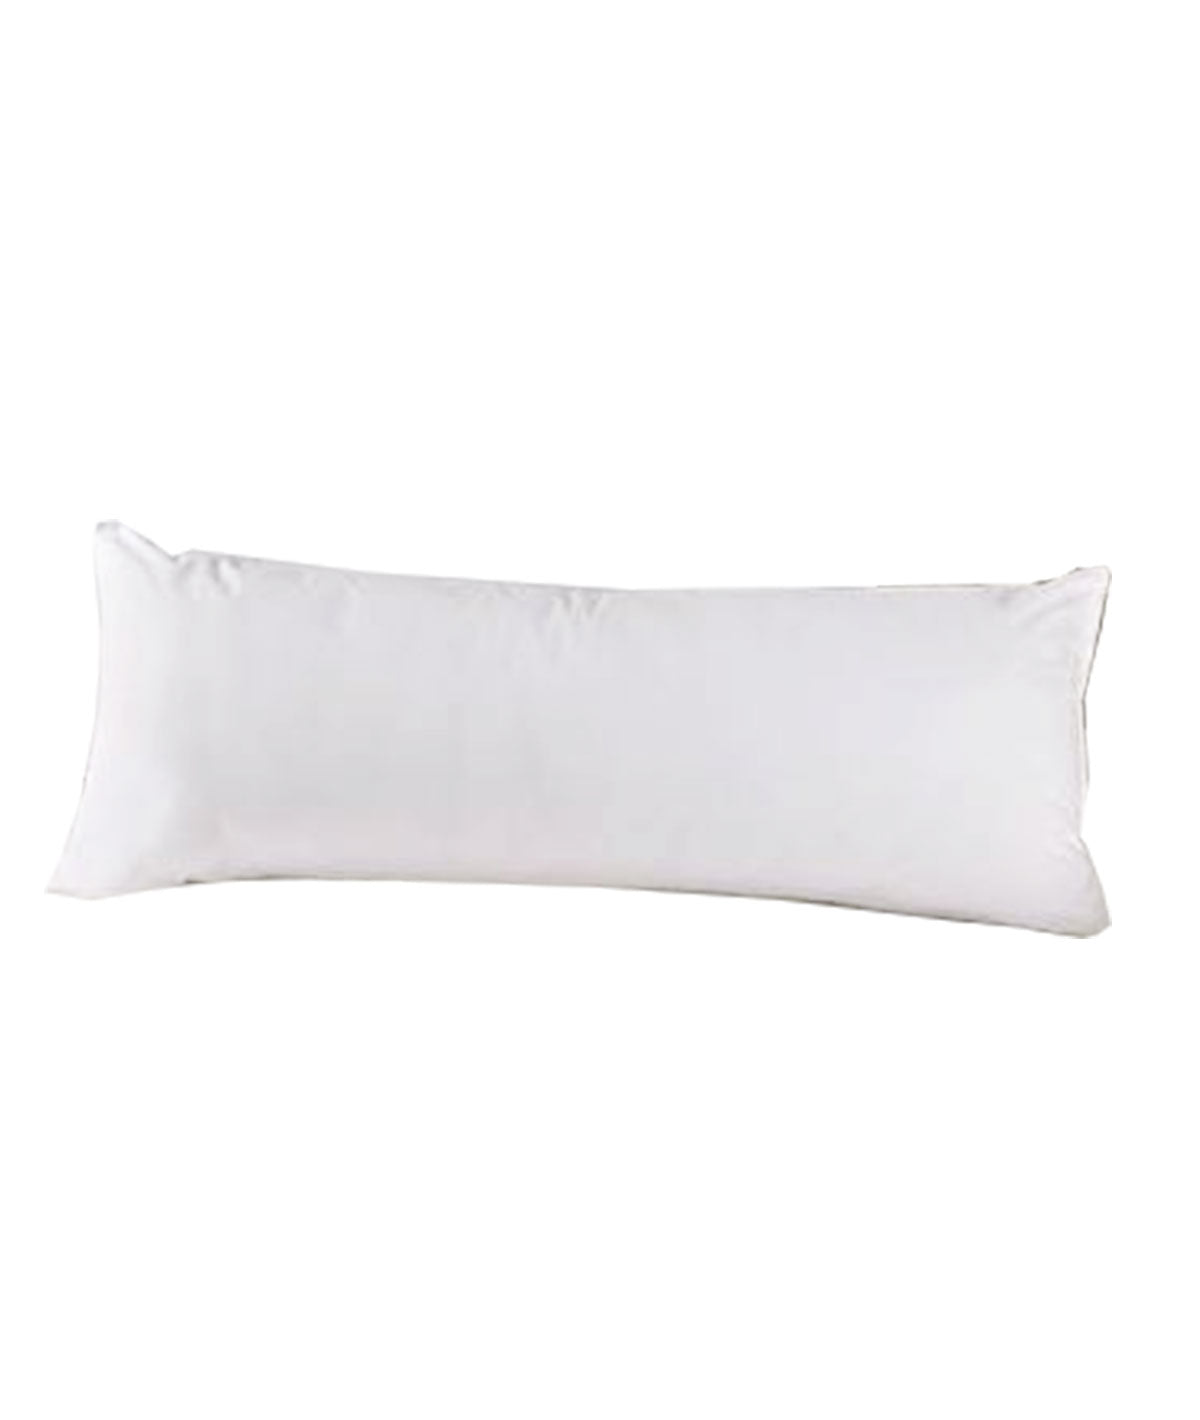 Pluchi Rectangular Cushion Filler (30 cm X 76 cm) (12" x 30")